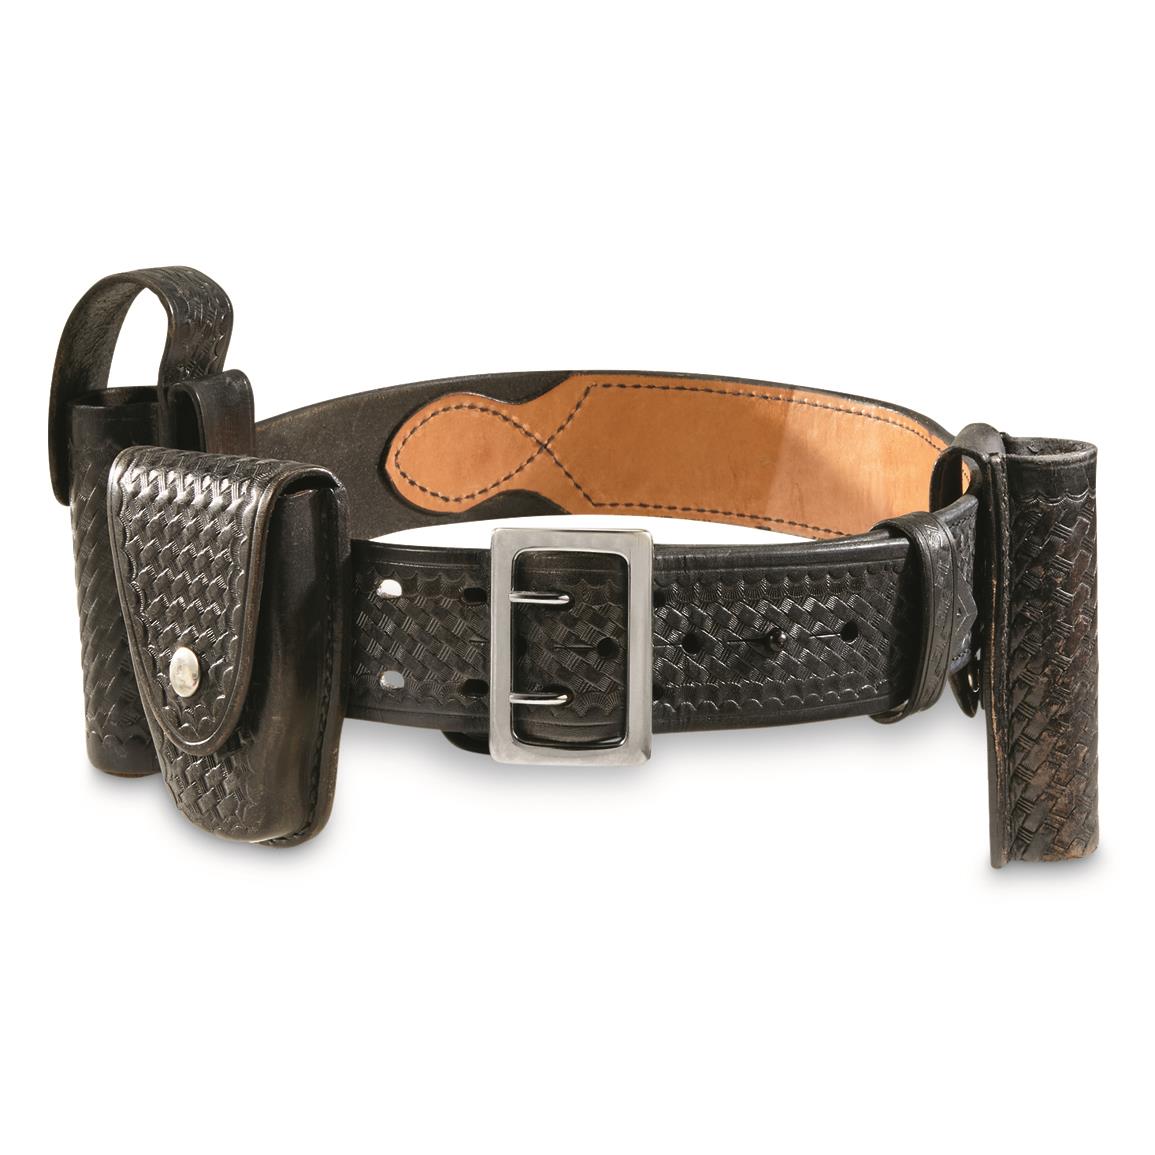 U.S. Police Surplus Leather Basketweave Duty Belt, Like New, Black